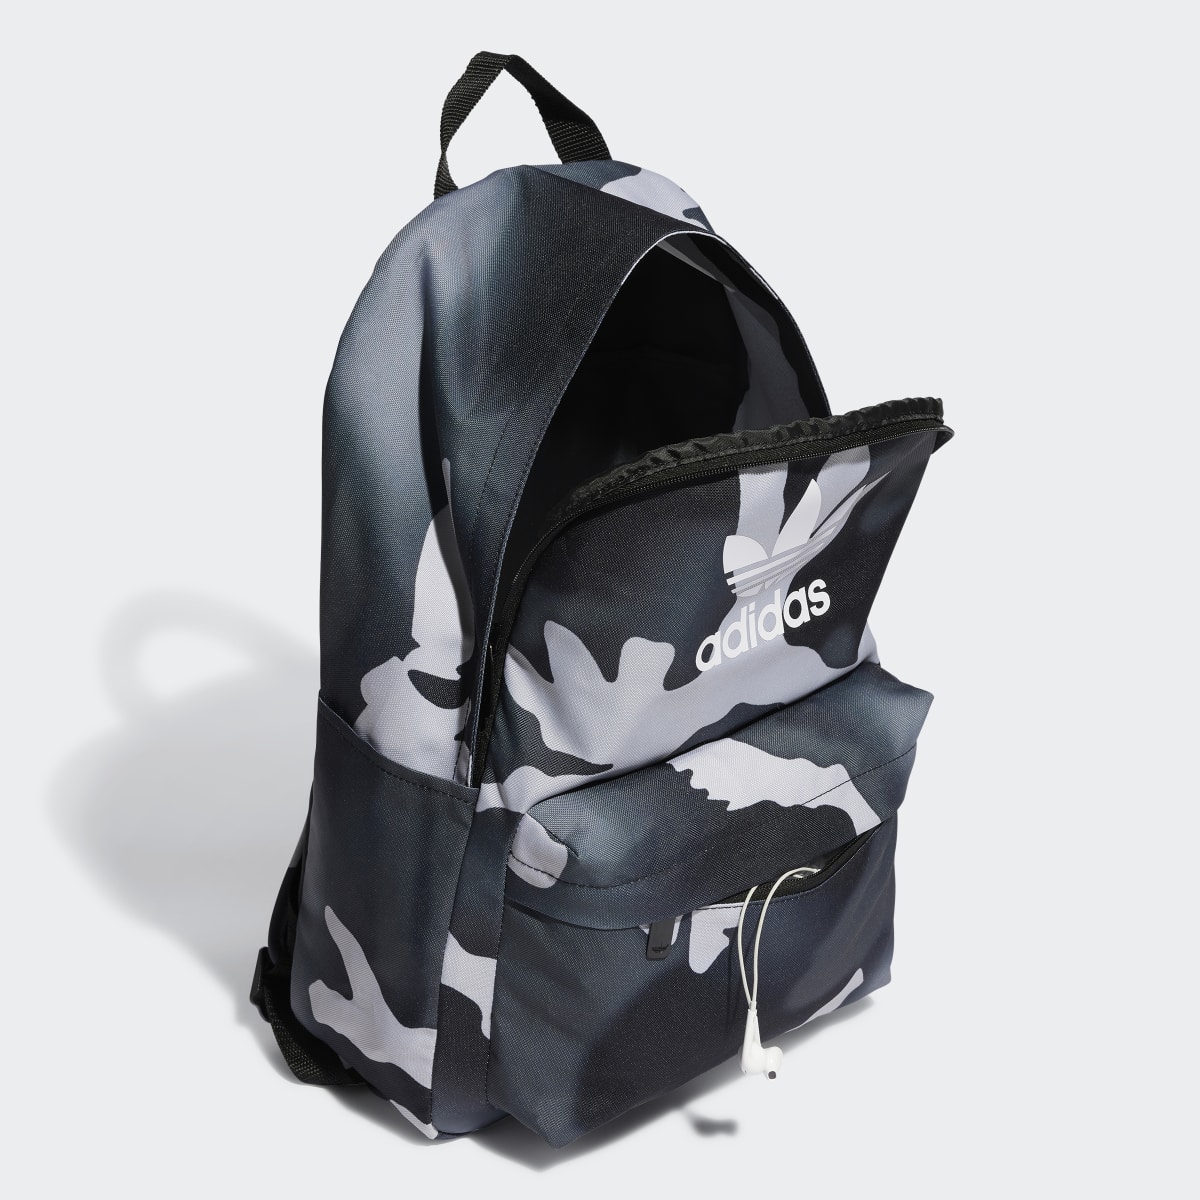 Adidas Camo Classic Backpack. 5